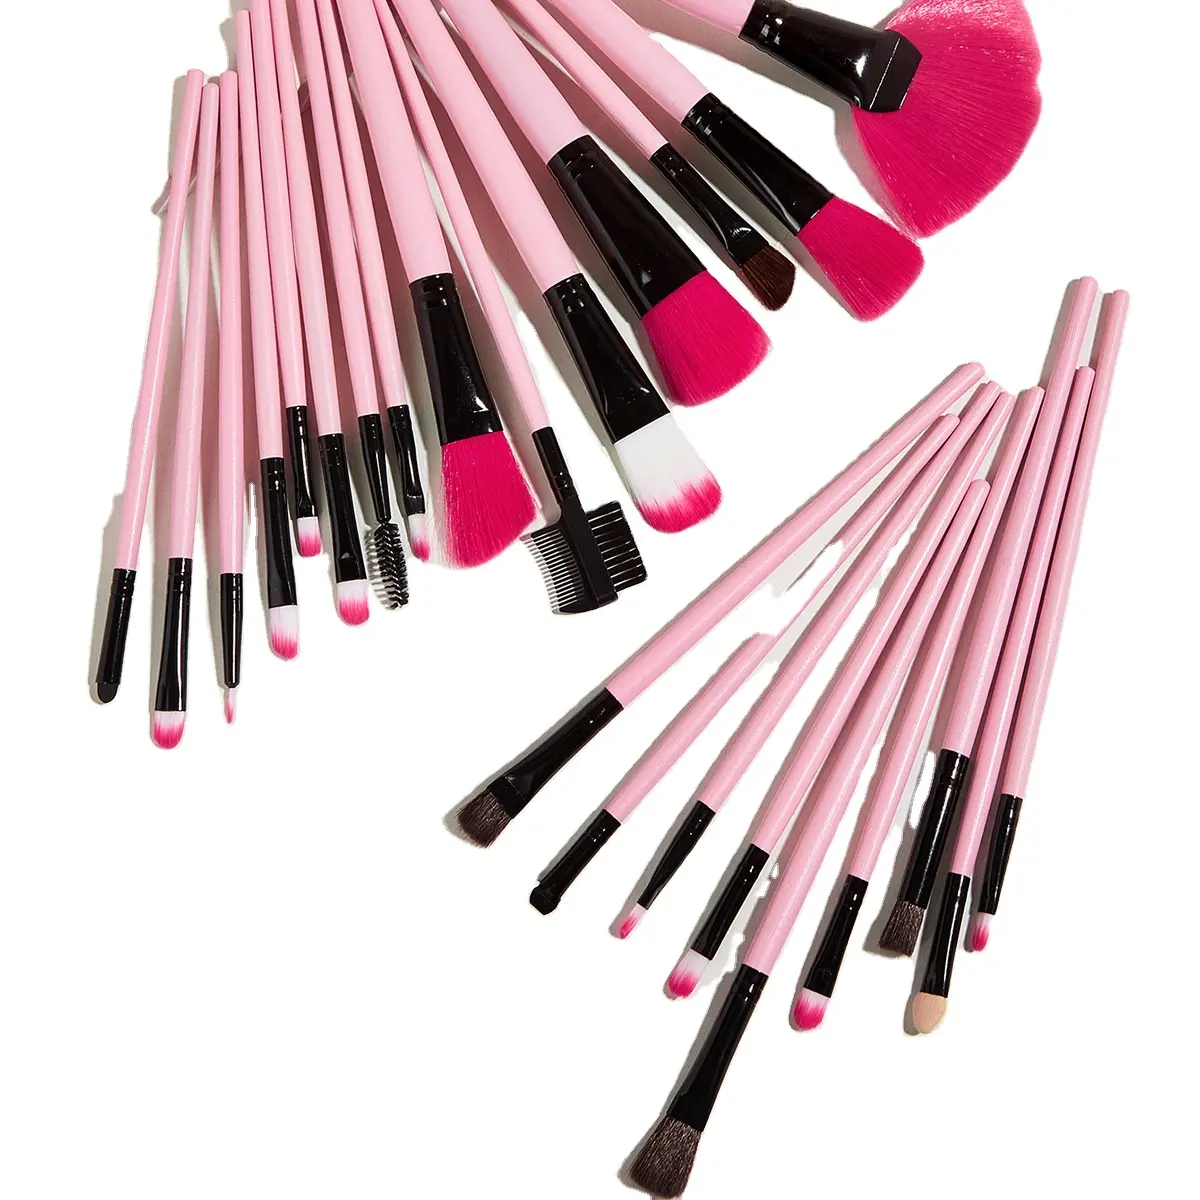 24 buah set kuas makeup kuas eyeshadow merah muda grosir desain baru kuas makeup ABS marmer 24 buah alas bedak sintetis premium